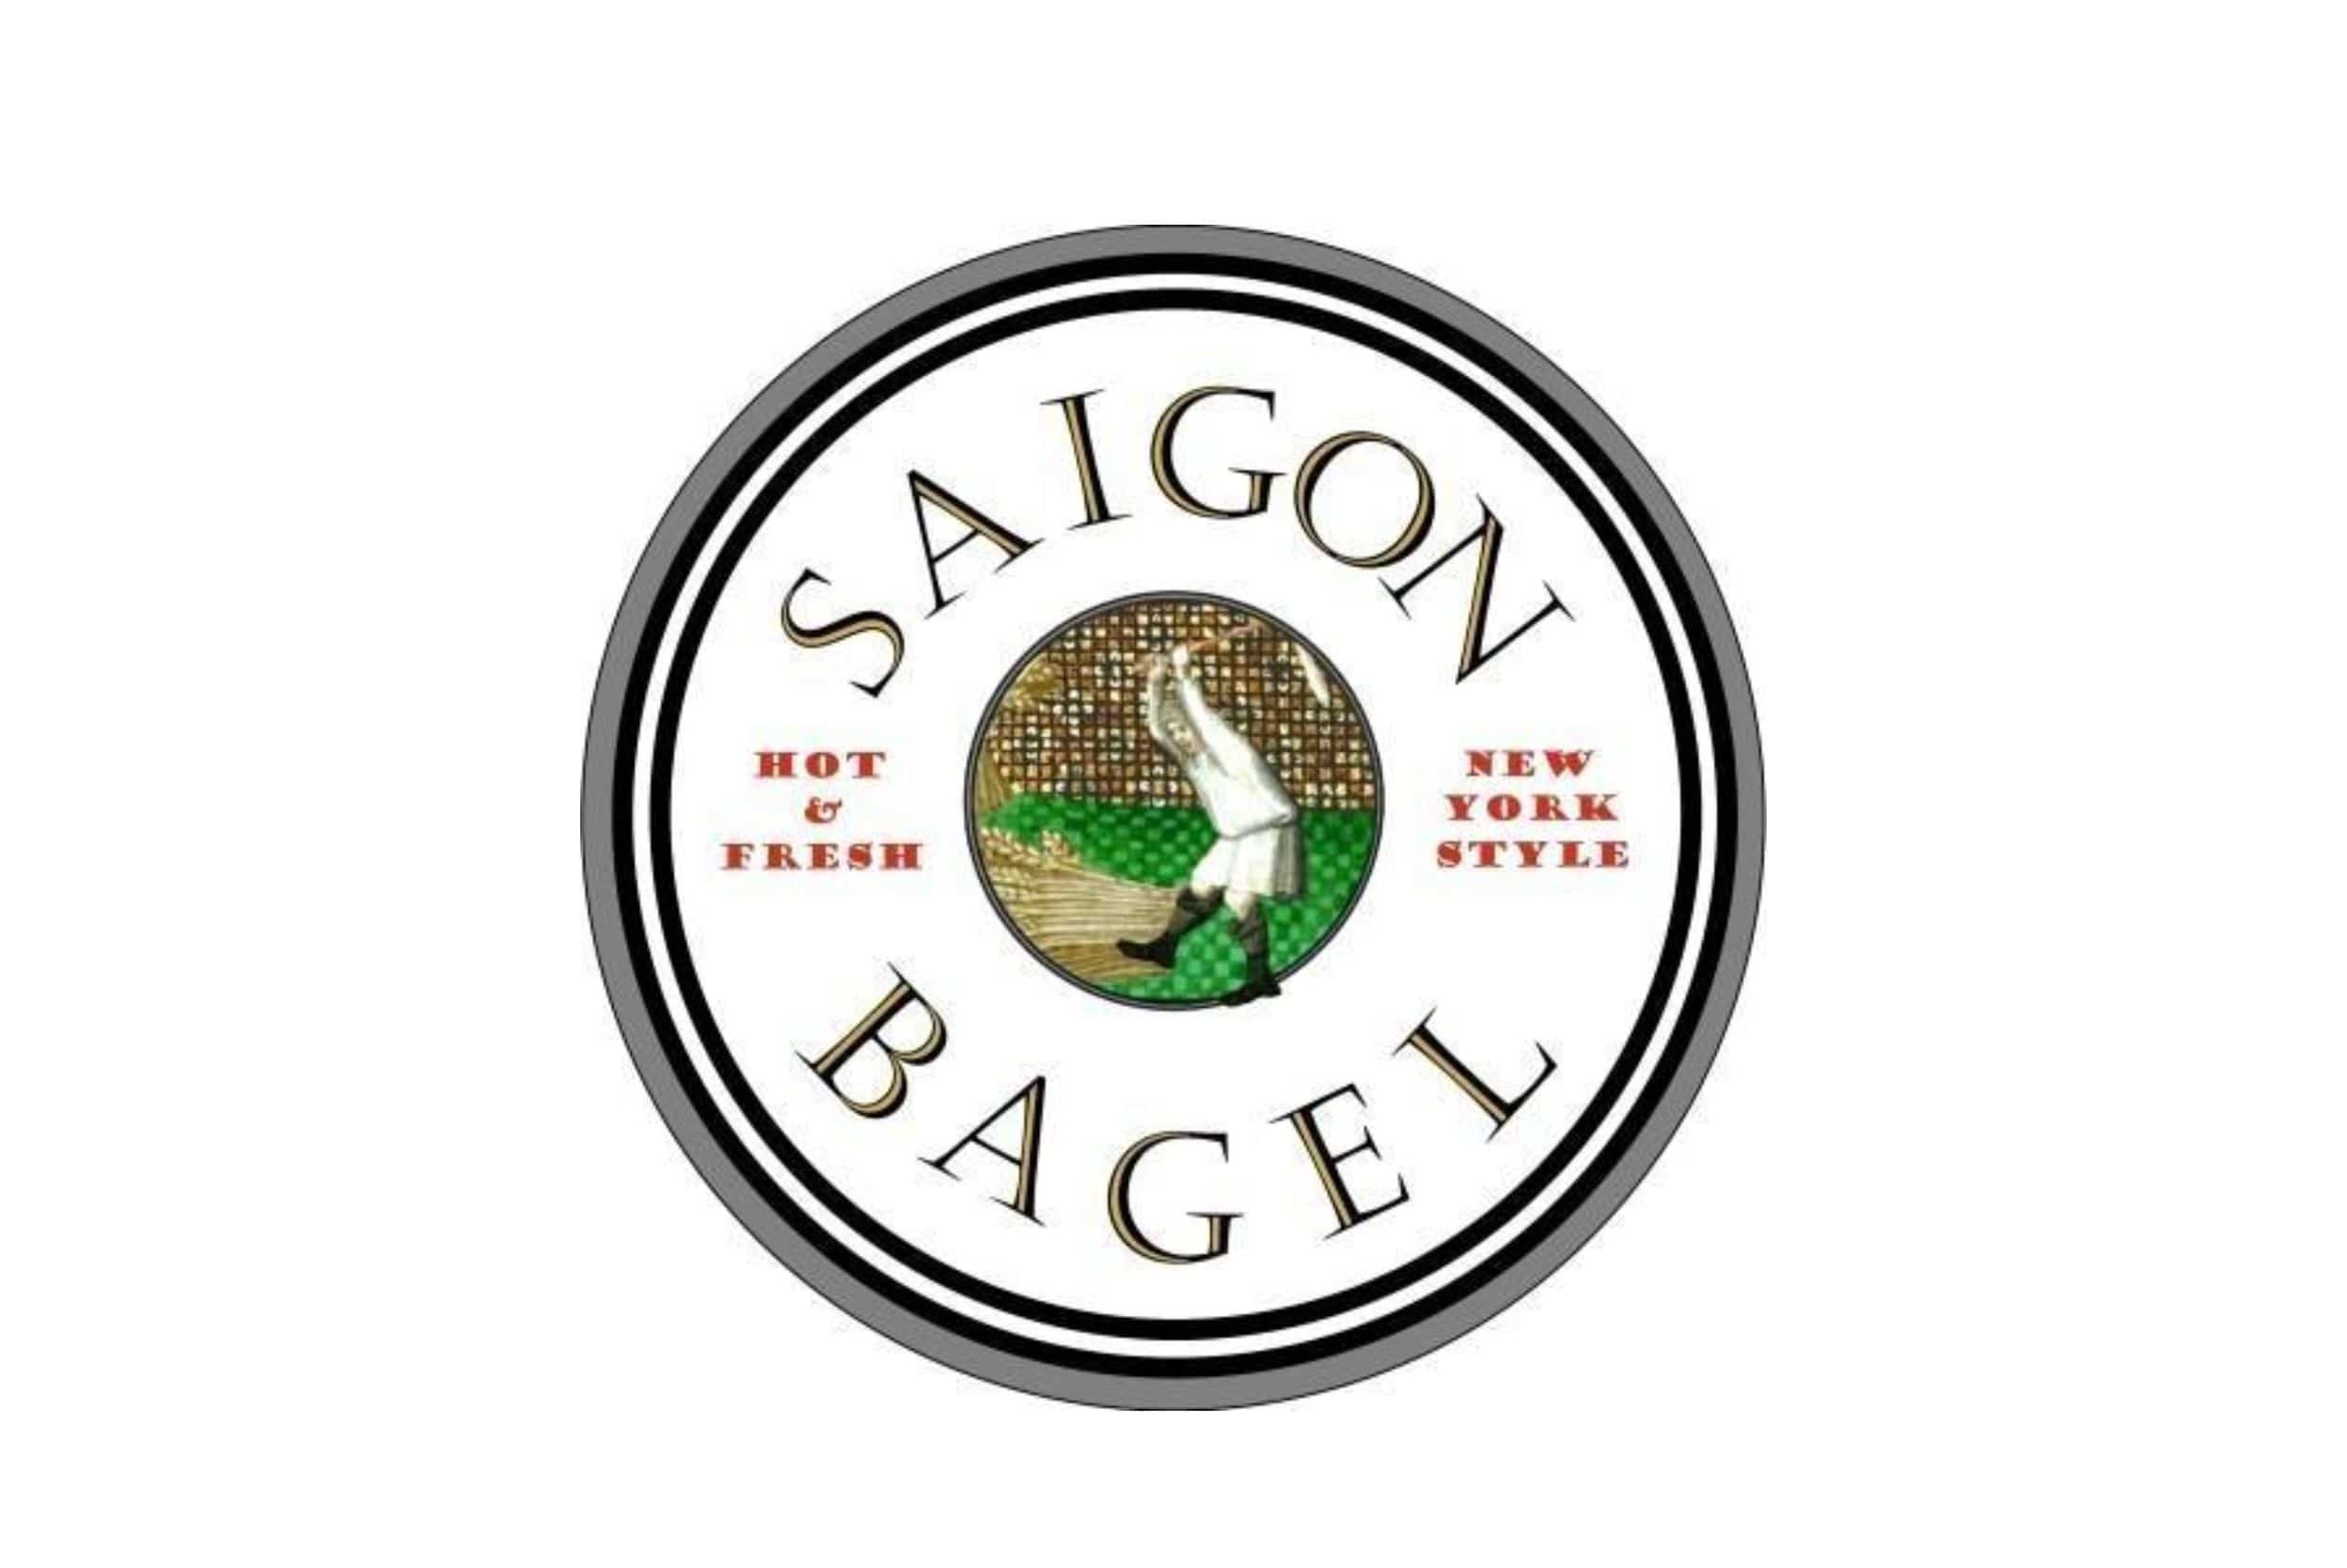 saigon-bagel-logo.jpg